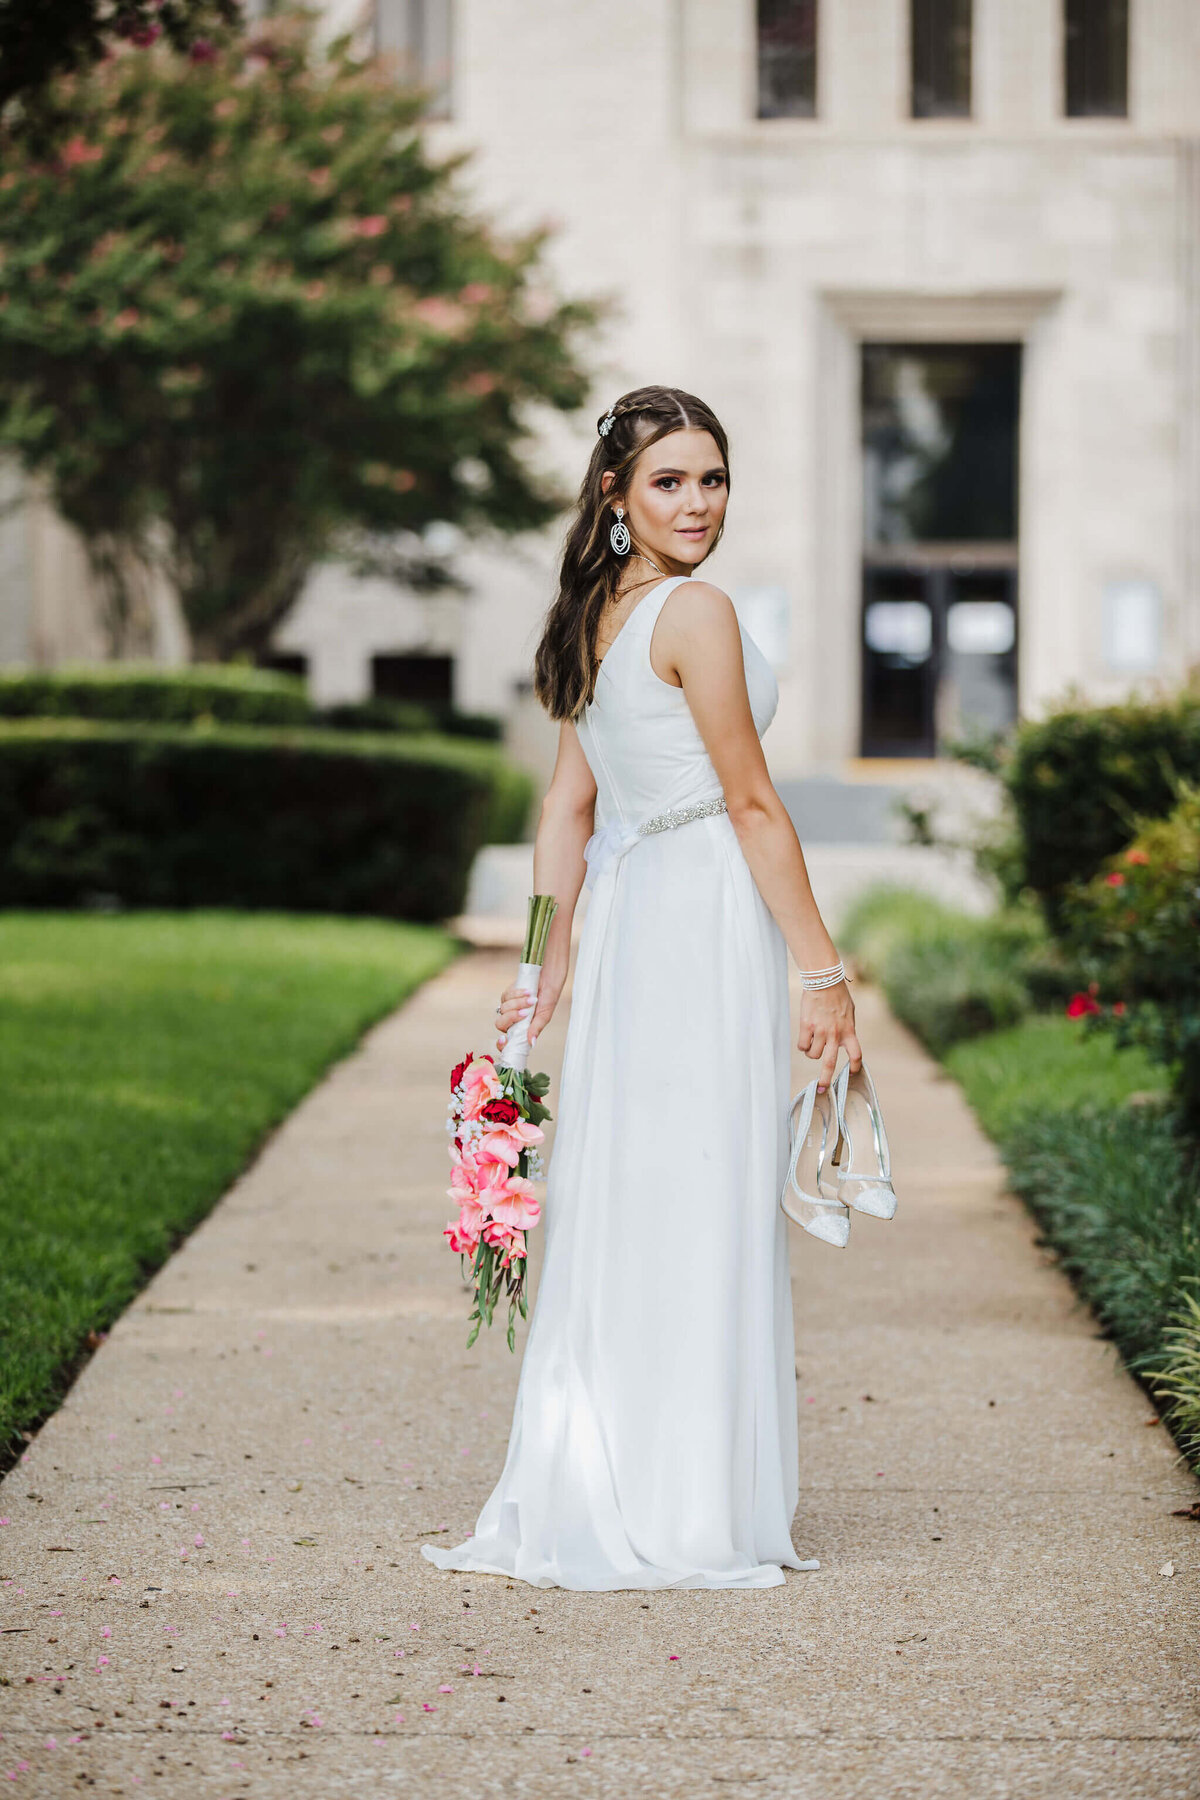 Bridal portrait of bride in white wedding gown after Longview, TX elopement